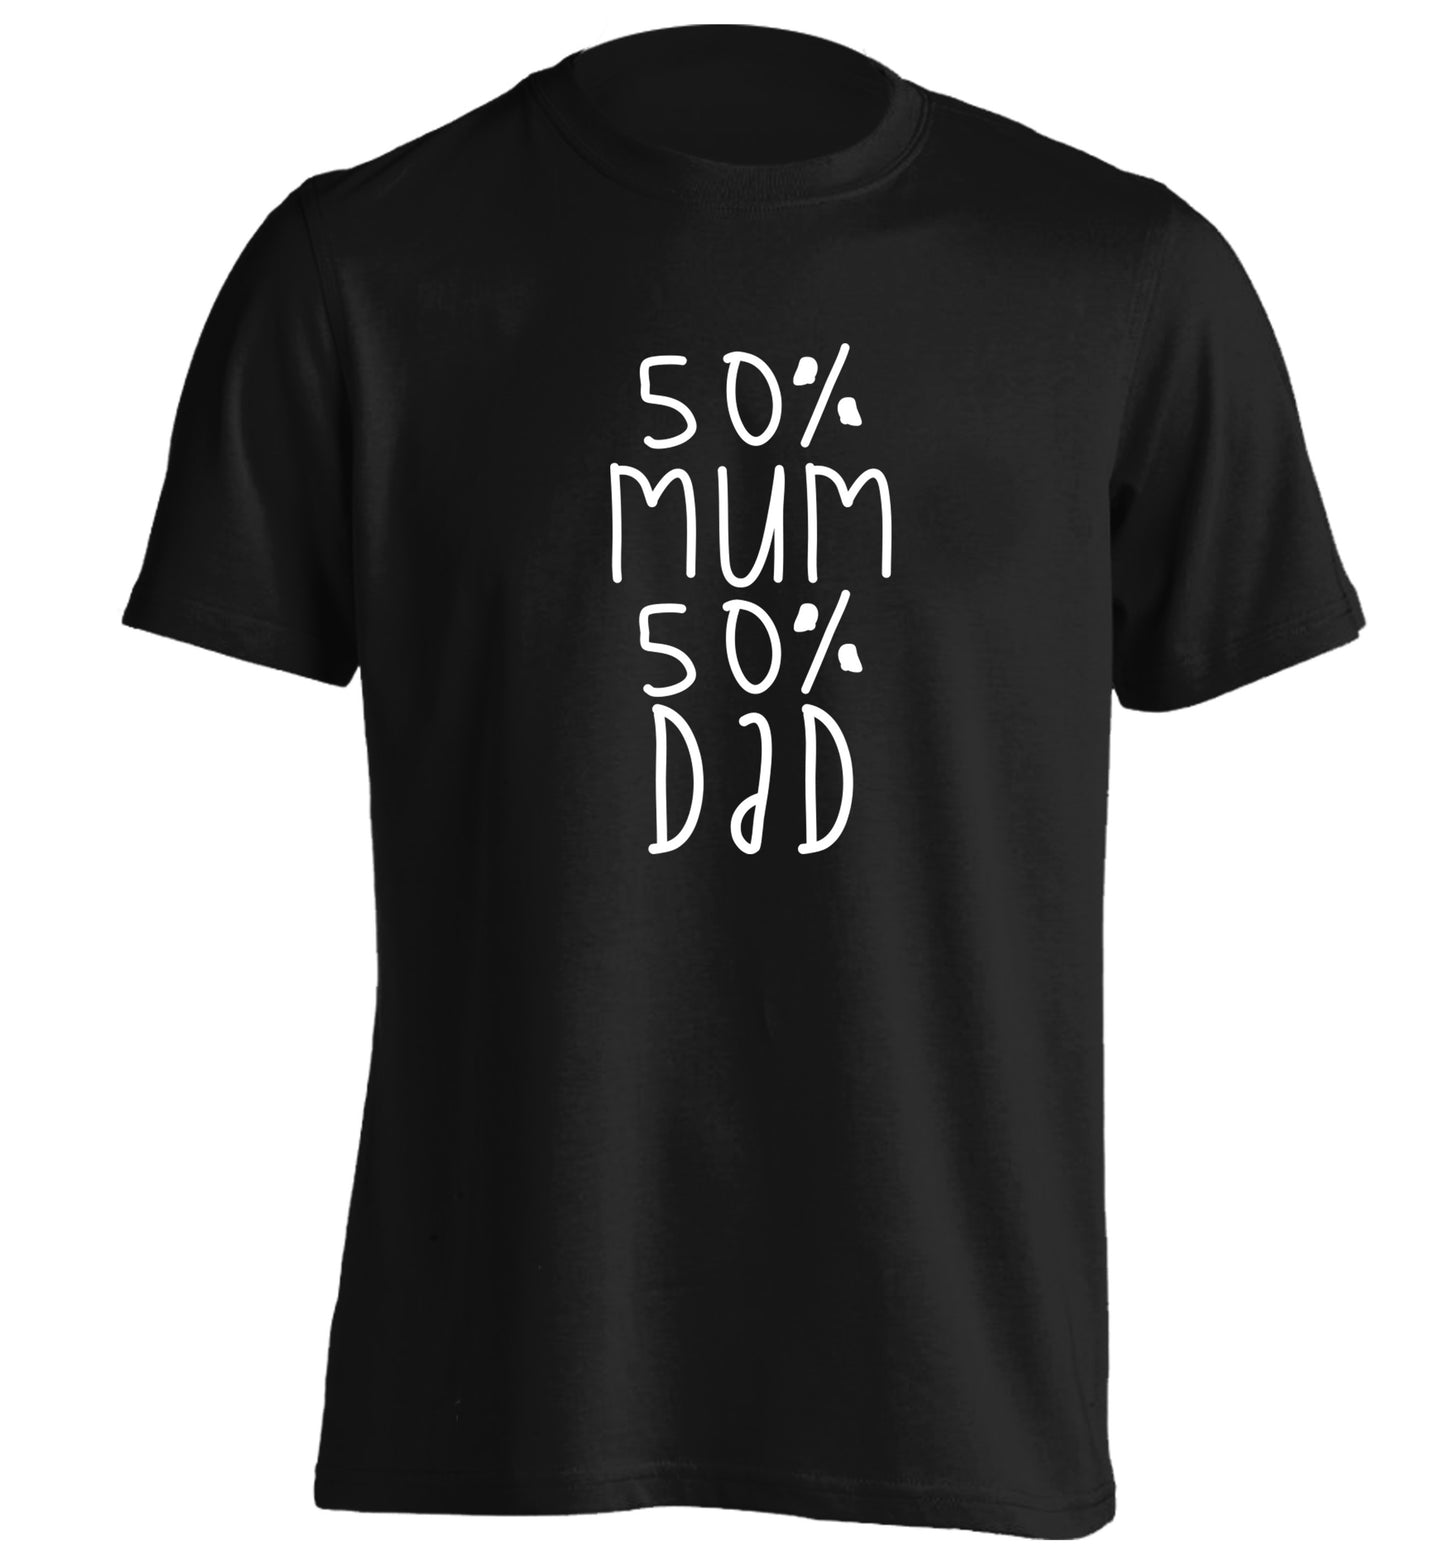 50% mum 50% dad adults unisex black Tshirt 2XL